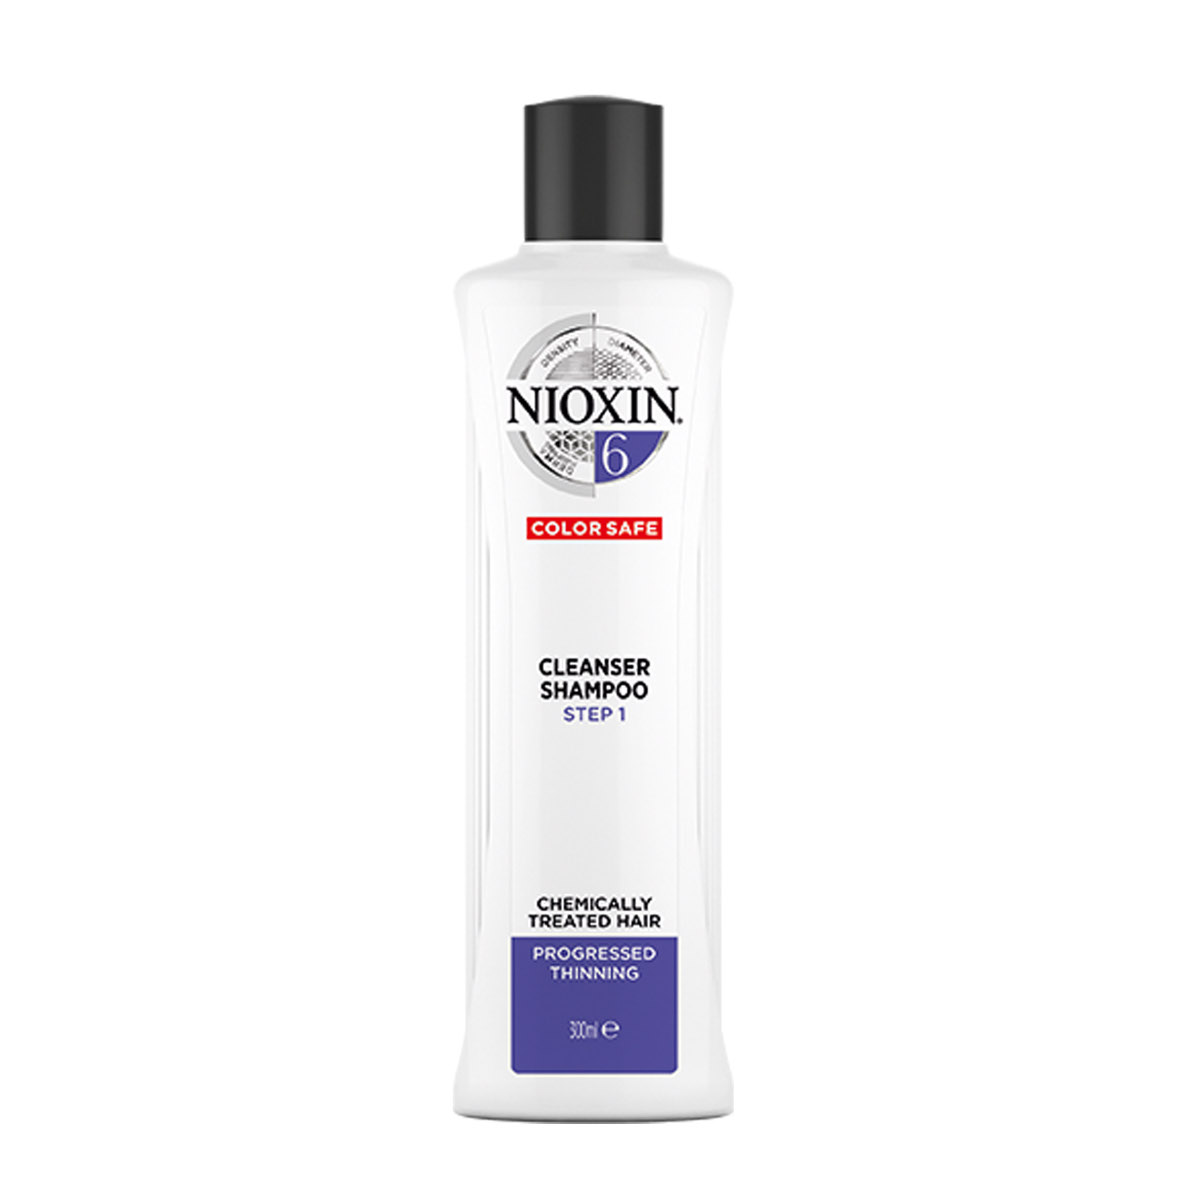 nioxin szampon cena